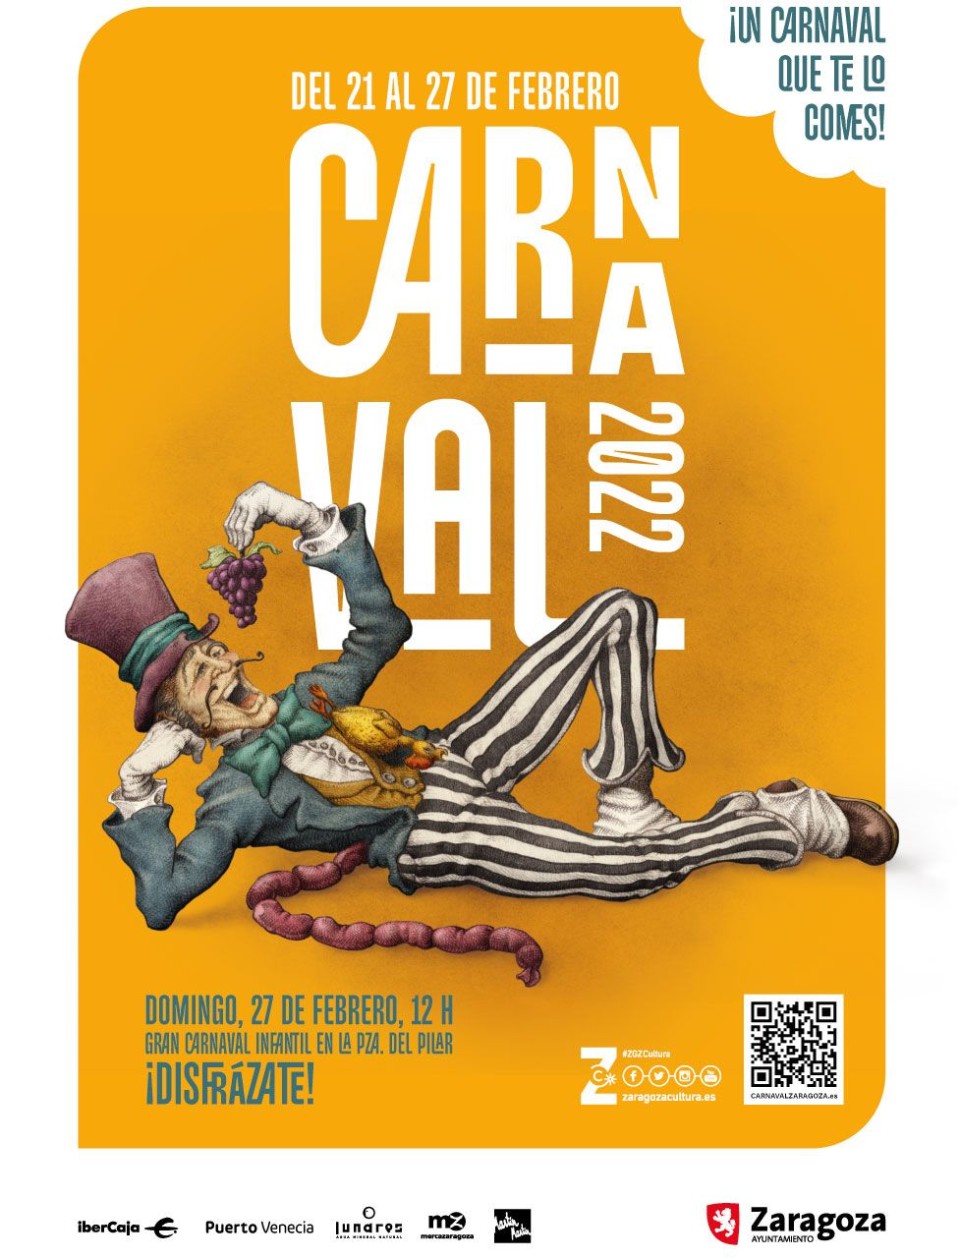 Imagen Carnaval 2022